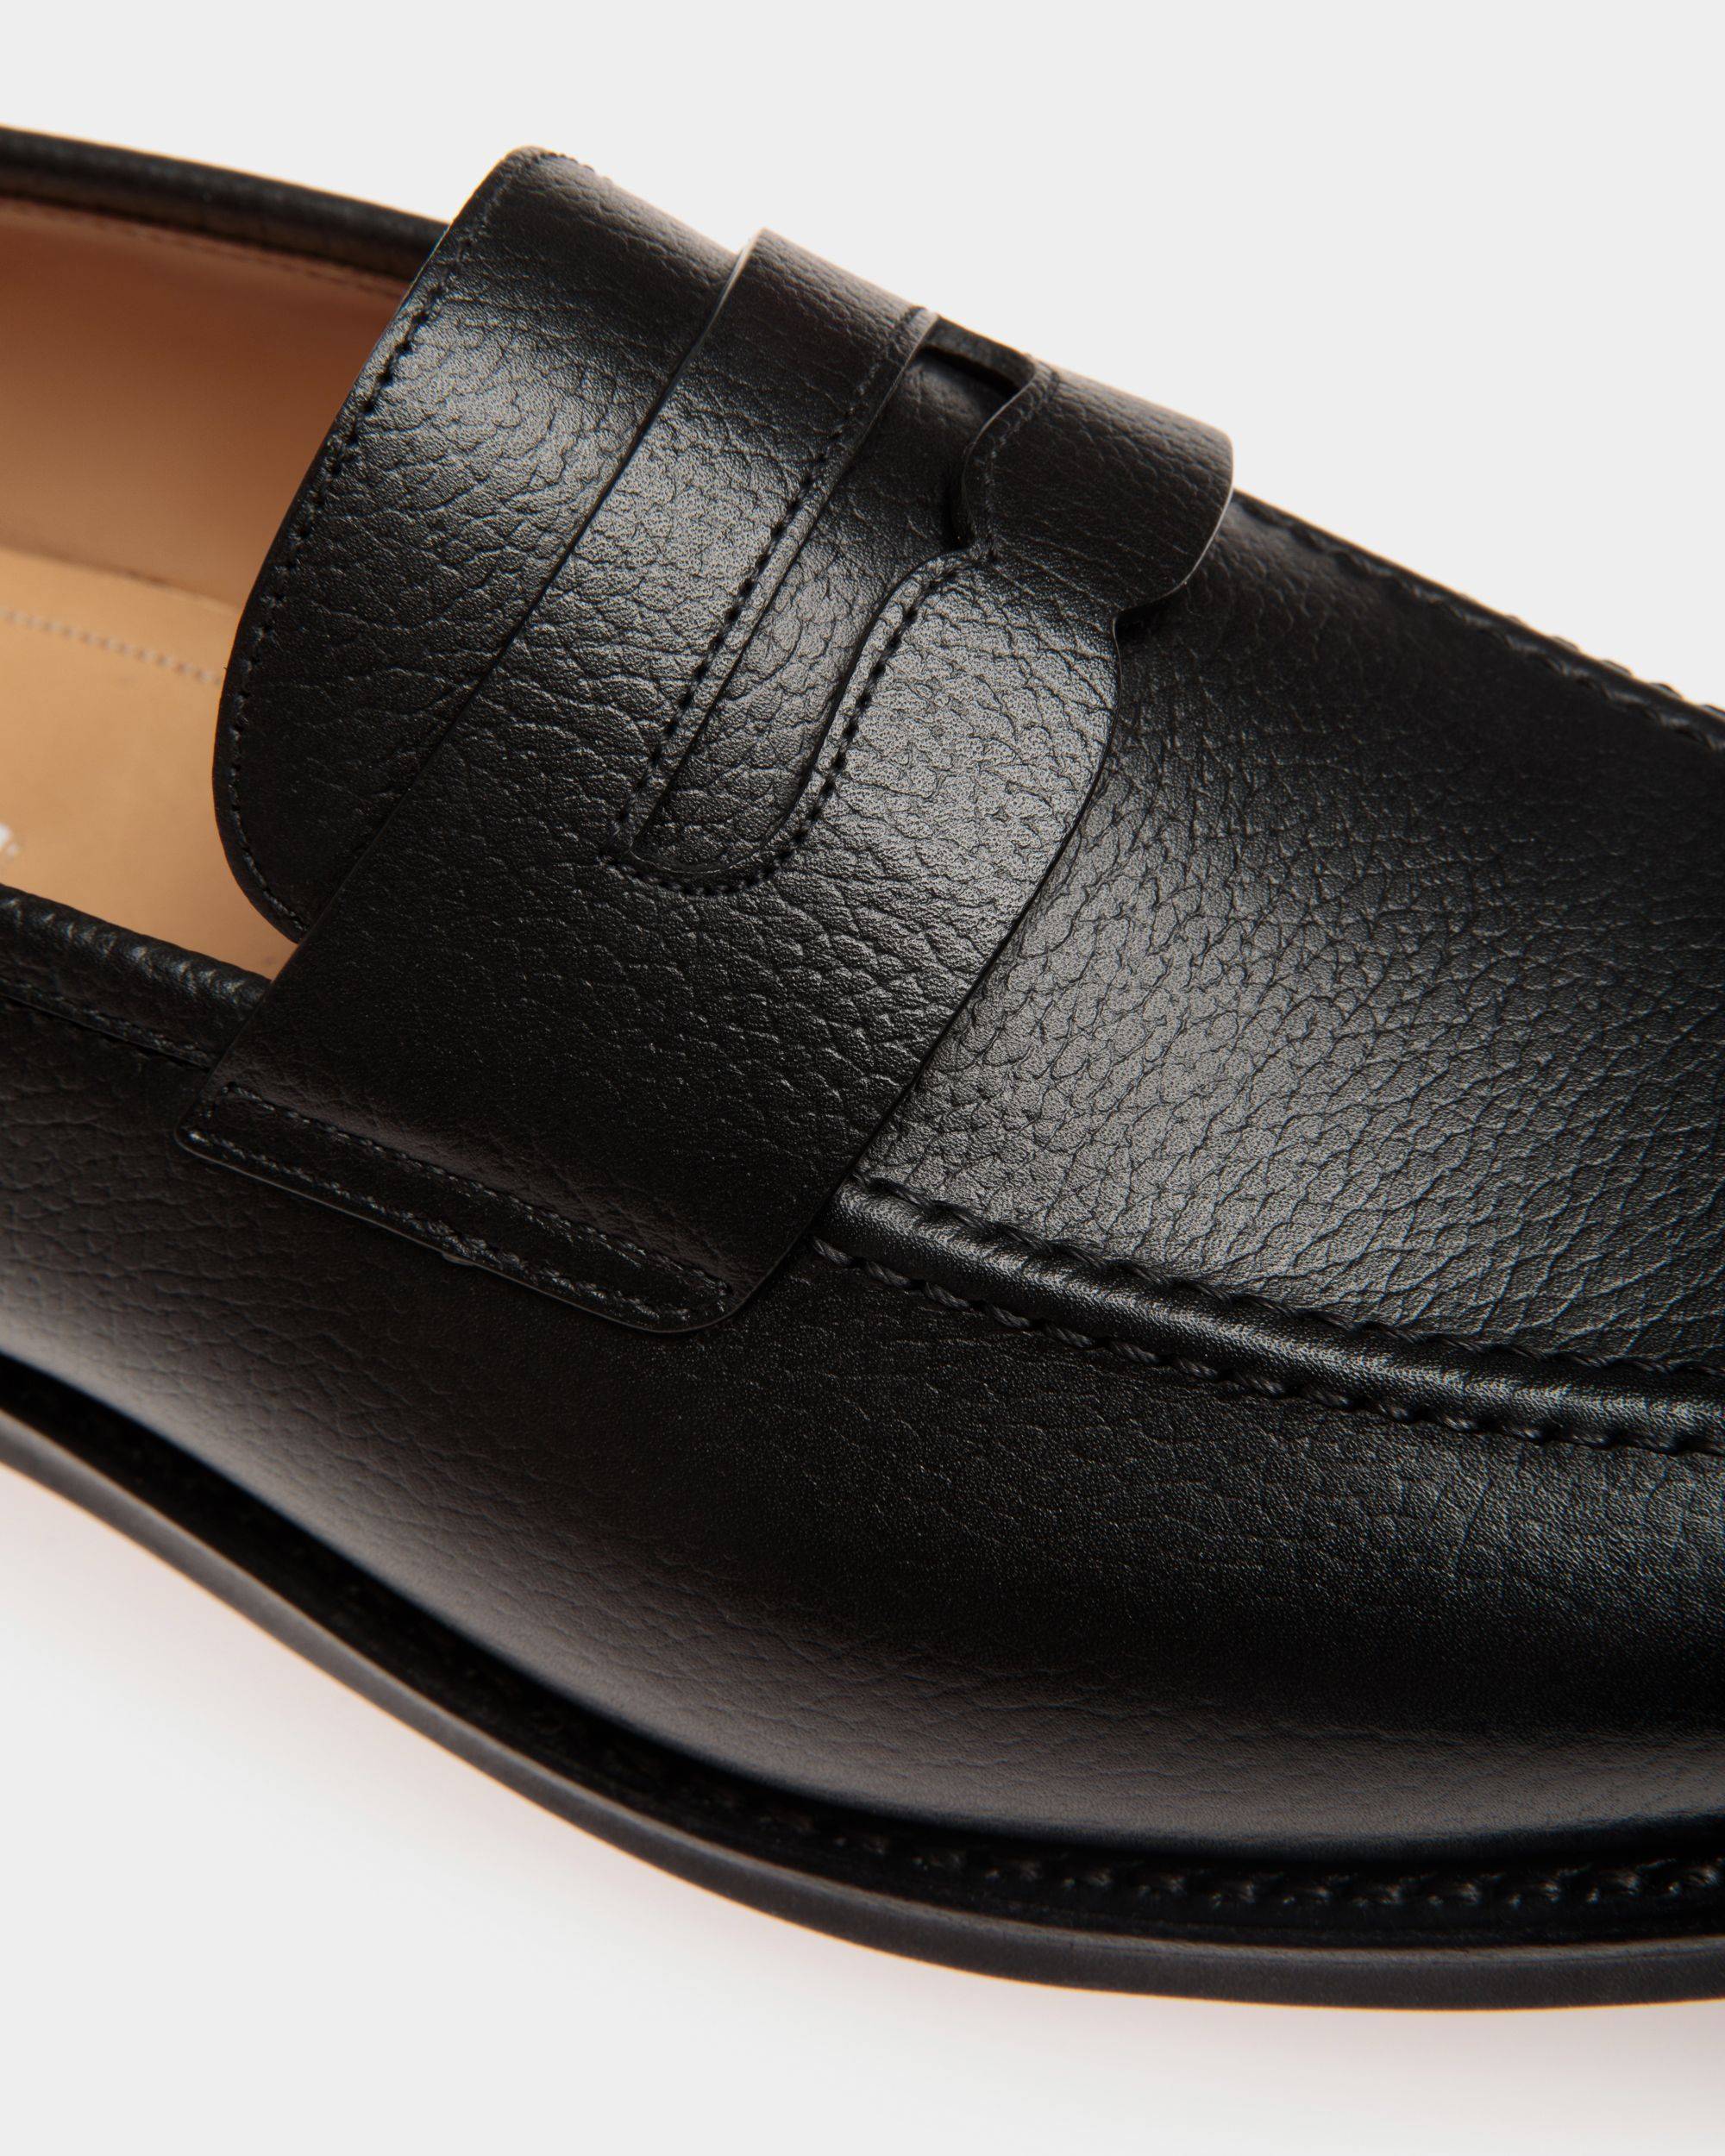 Schoenen | Men's Loafer in Black Embossed Leather | Bally | Still Life Detail